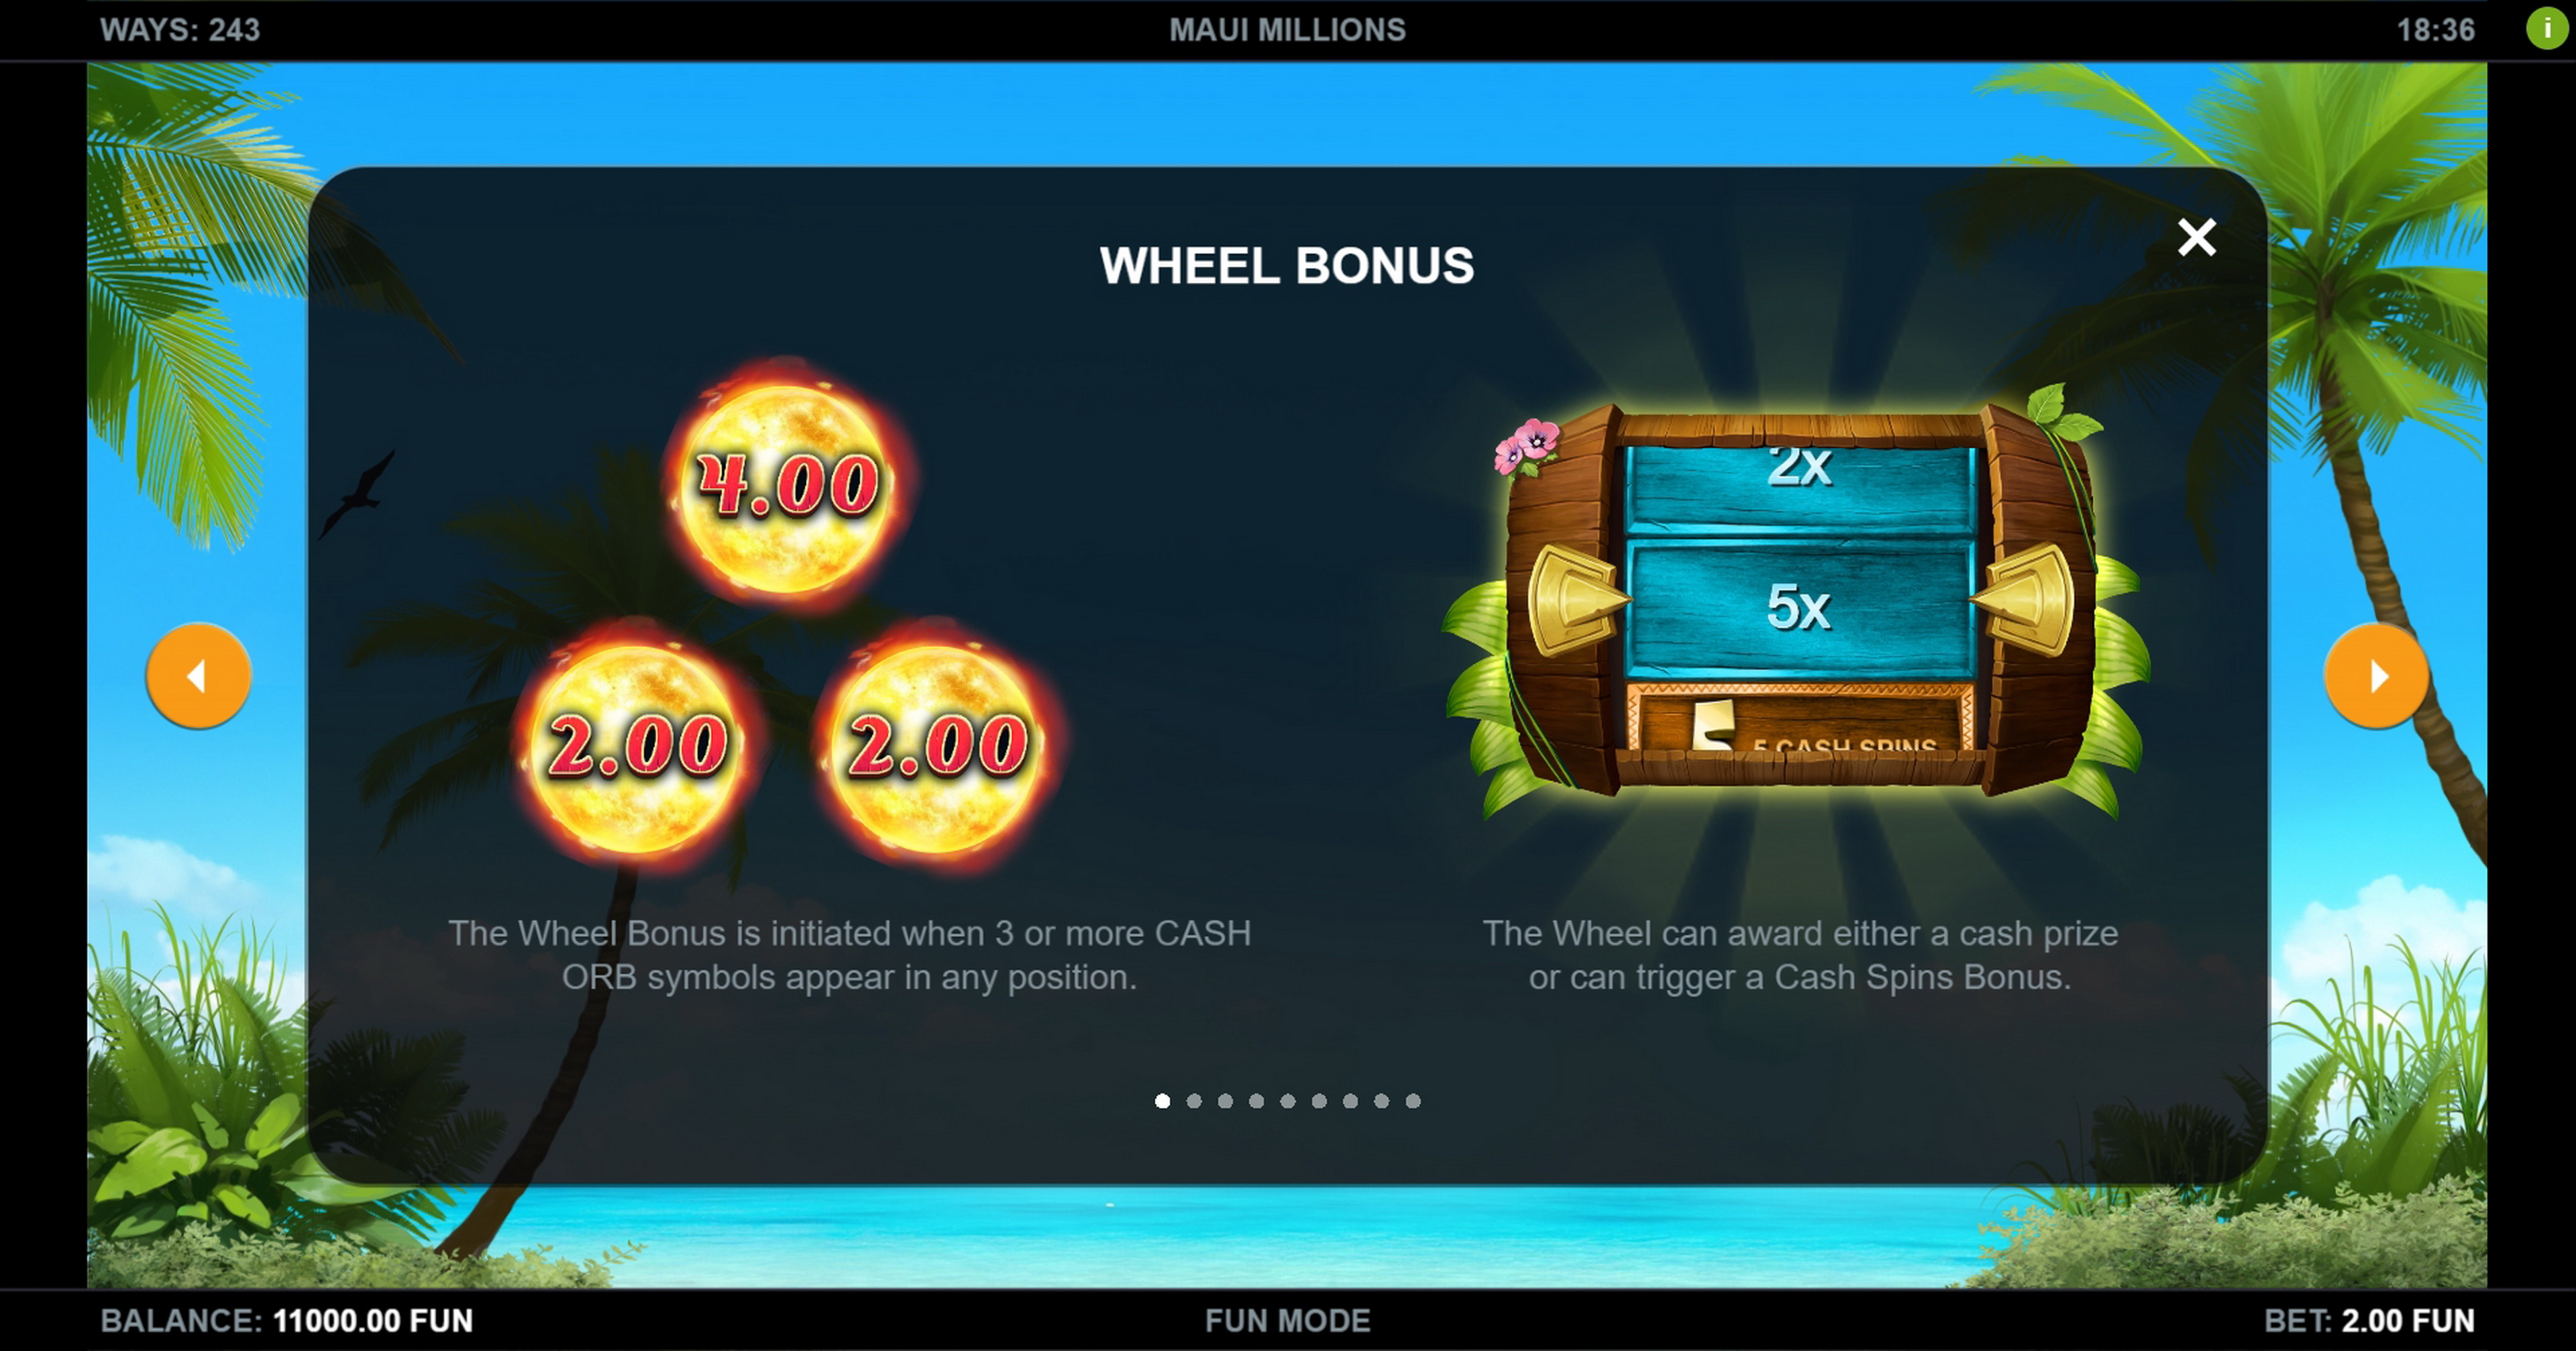 Info of Maui Millions Slot Game by Kalamba Games